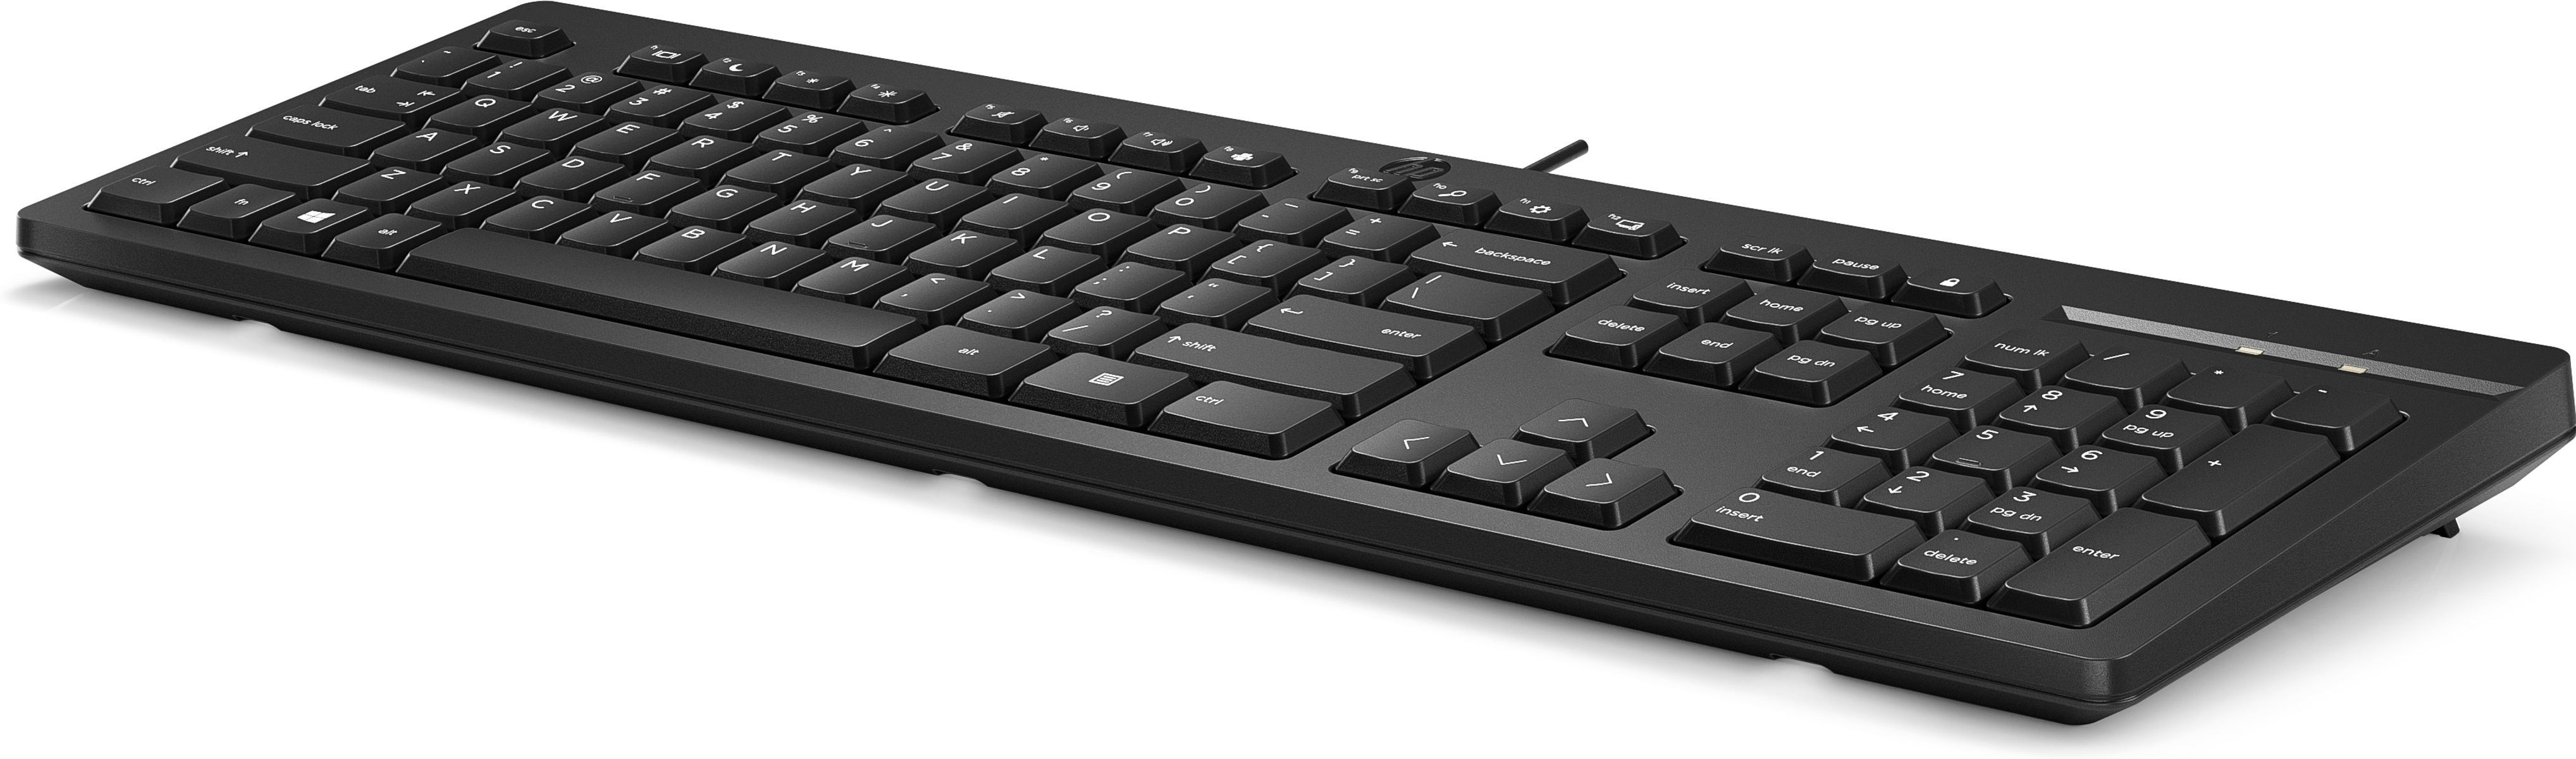 Tastatur HP 266C9AA#ABD,